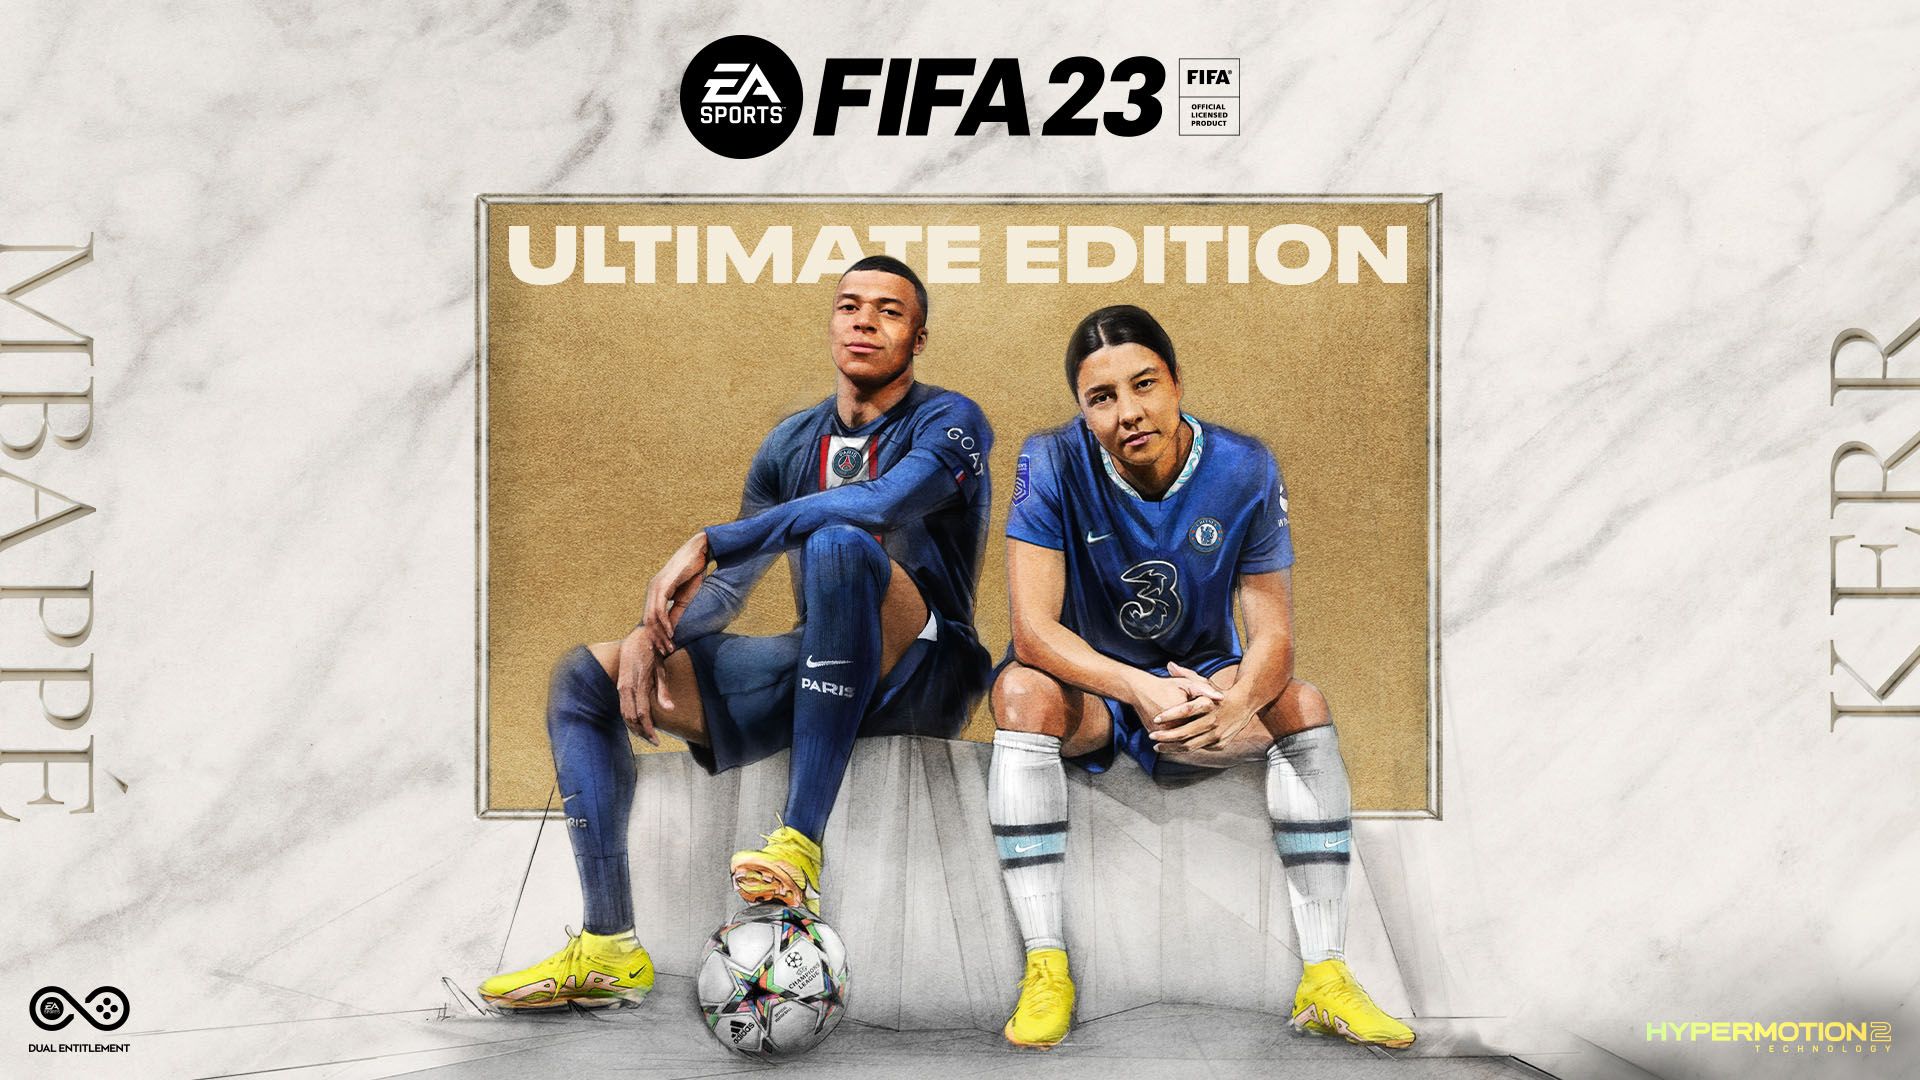 FIFA 23 HR cover 1920x1080 1